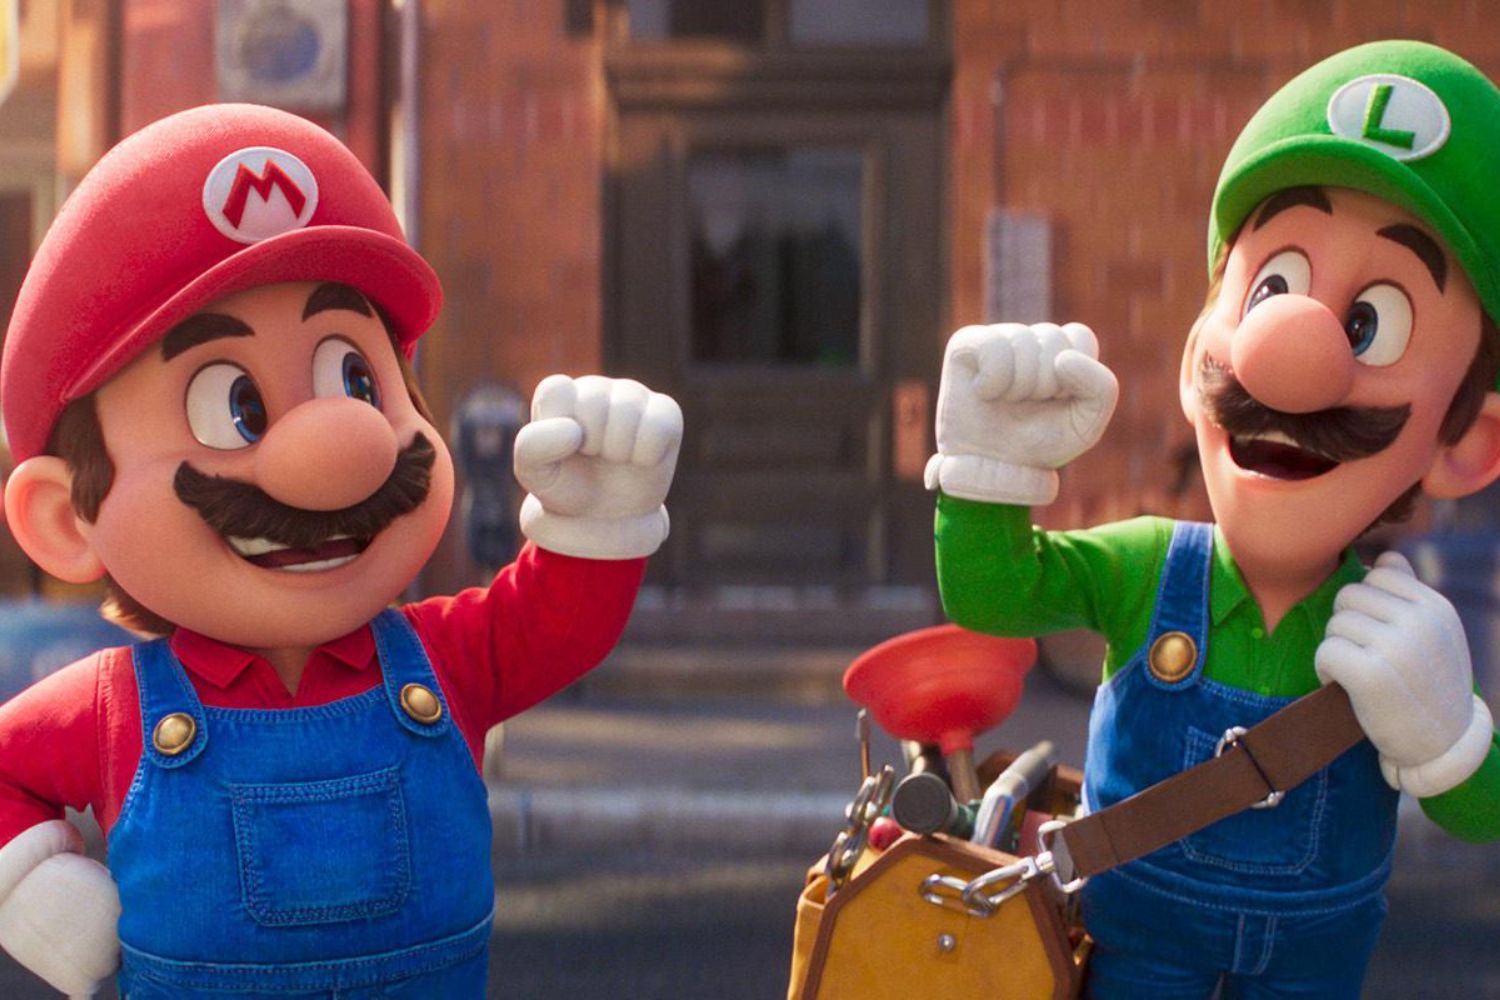 Super Mario Bros agora mira US$ 1 bi de bilheteria - Forbes